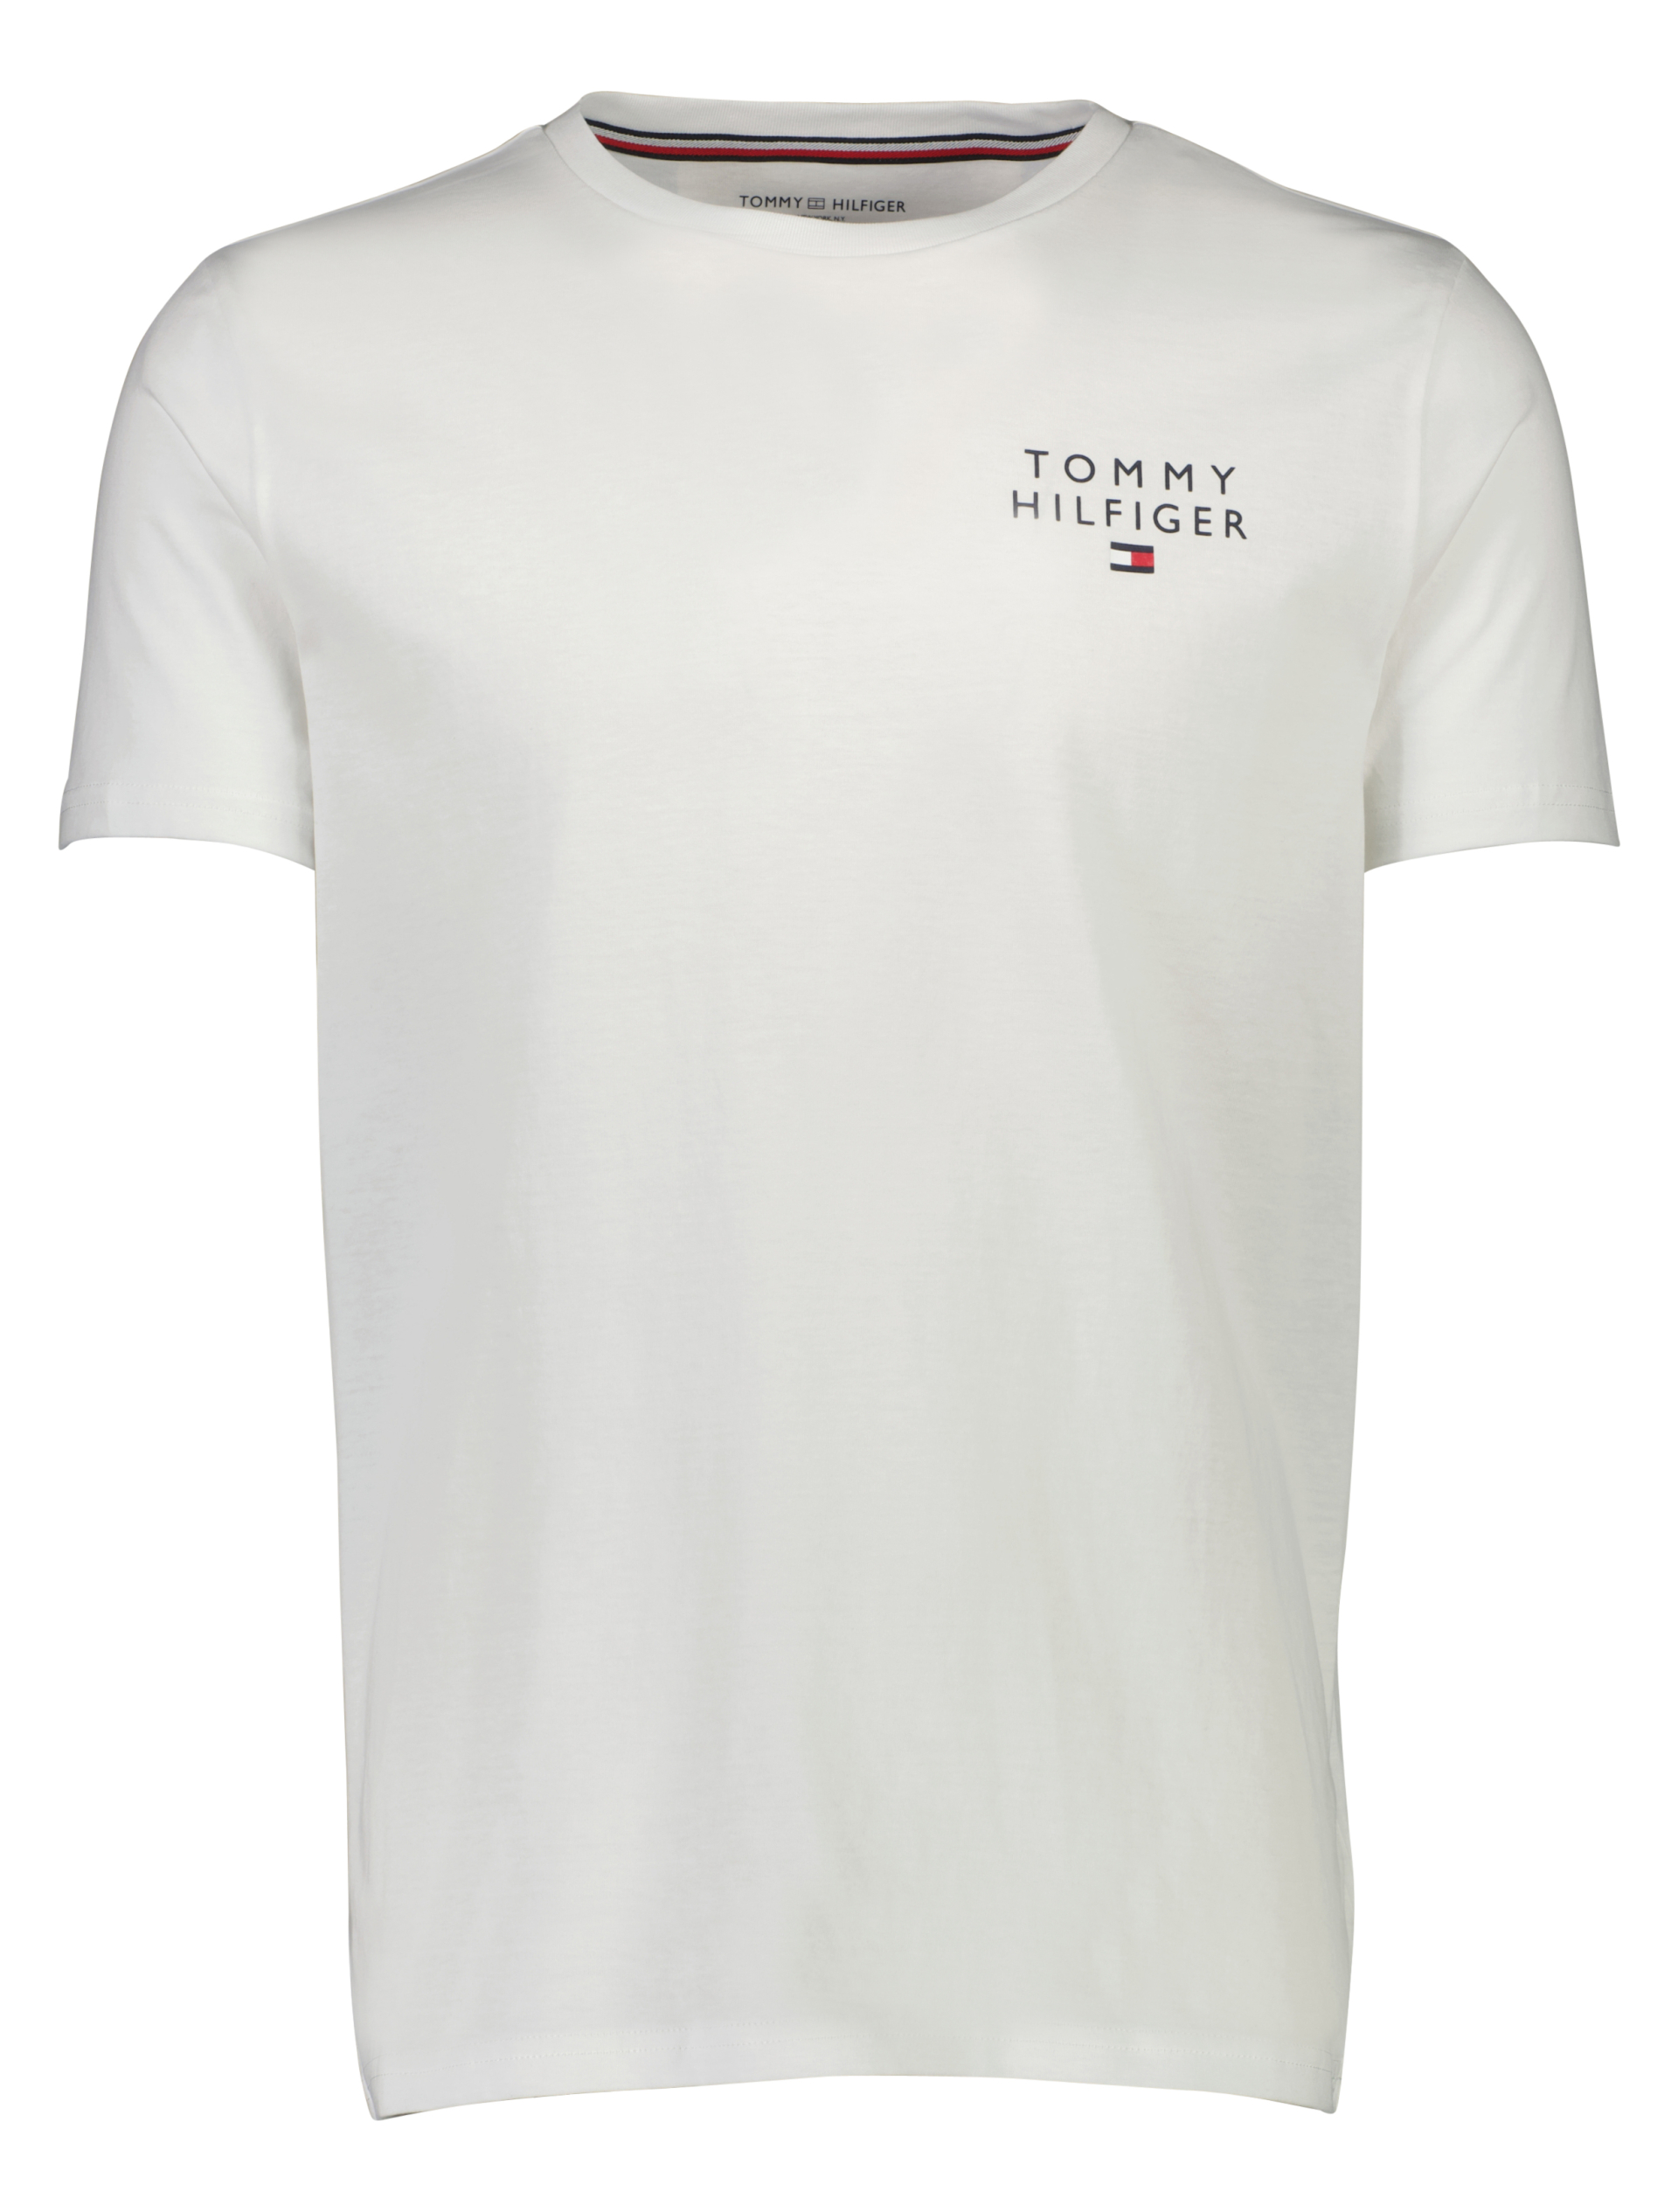 Tommy Hilfiger T-shirt hvid / ybr white